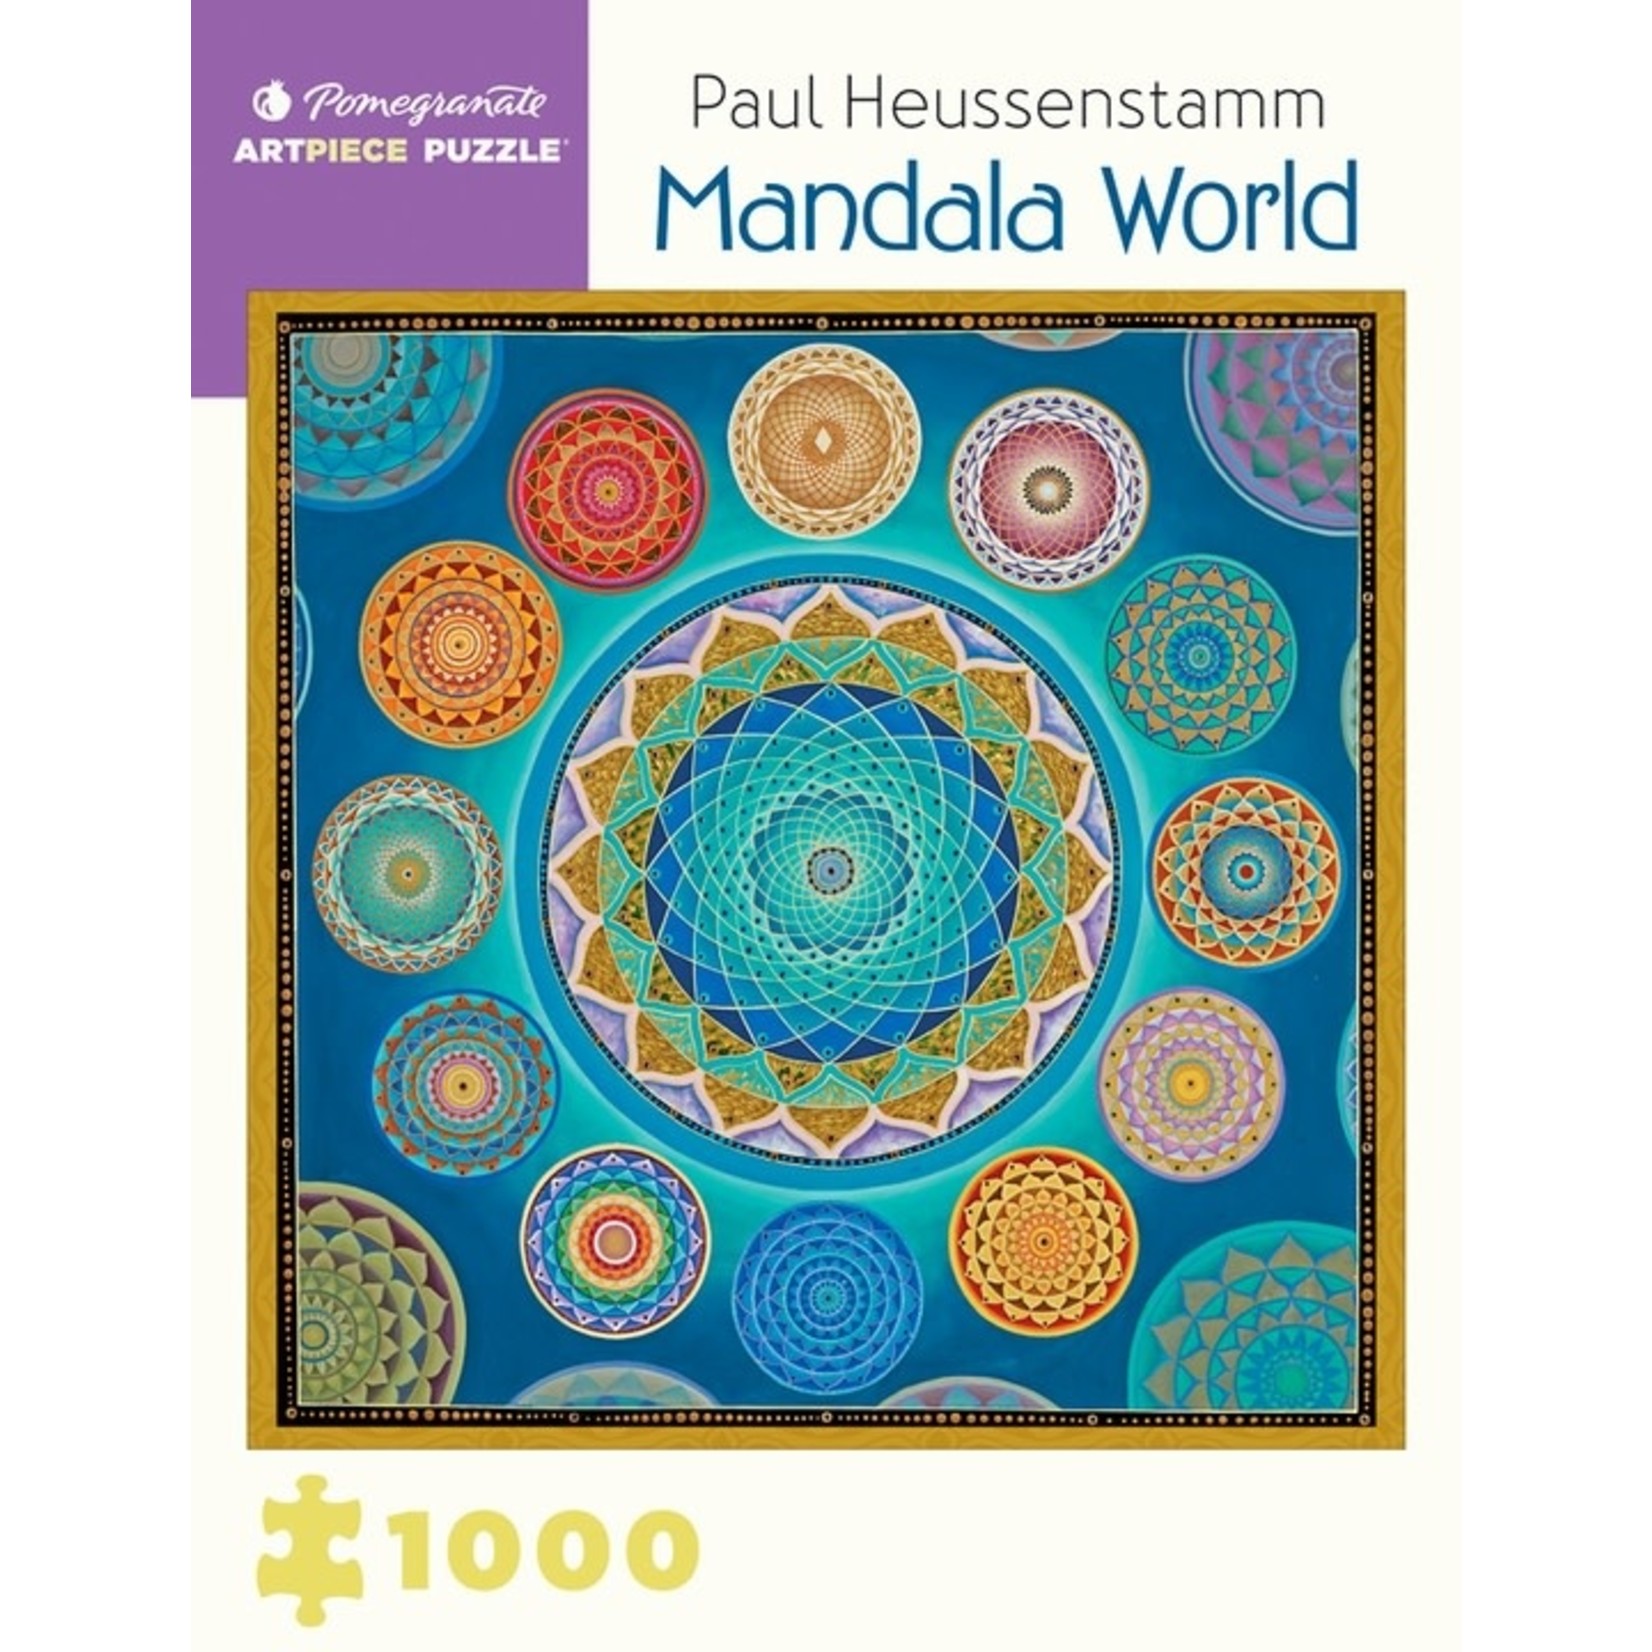 Paul Heussenstamm: Mandala World 1000pc